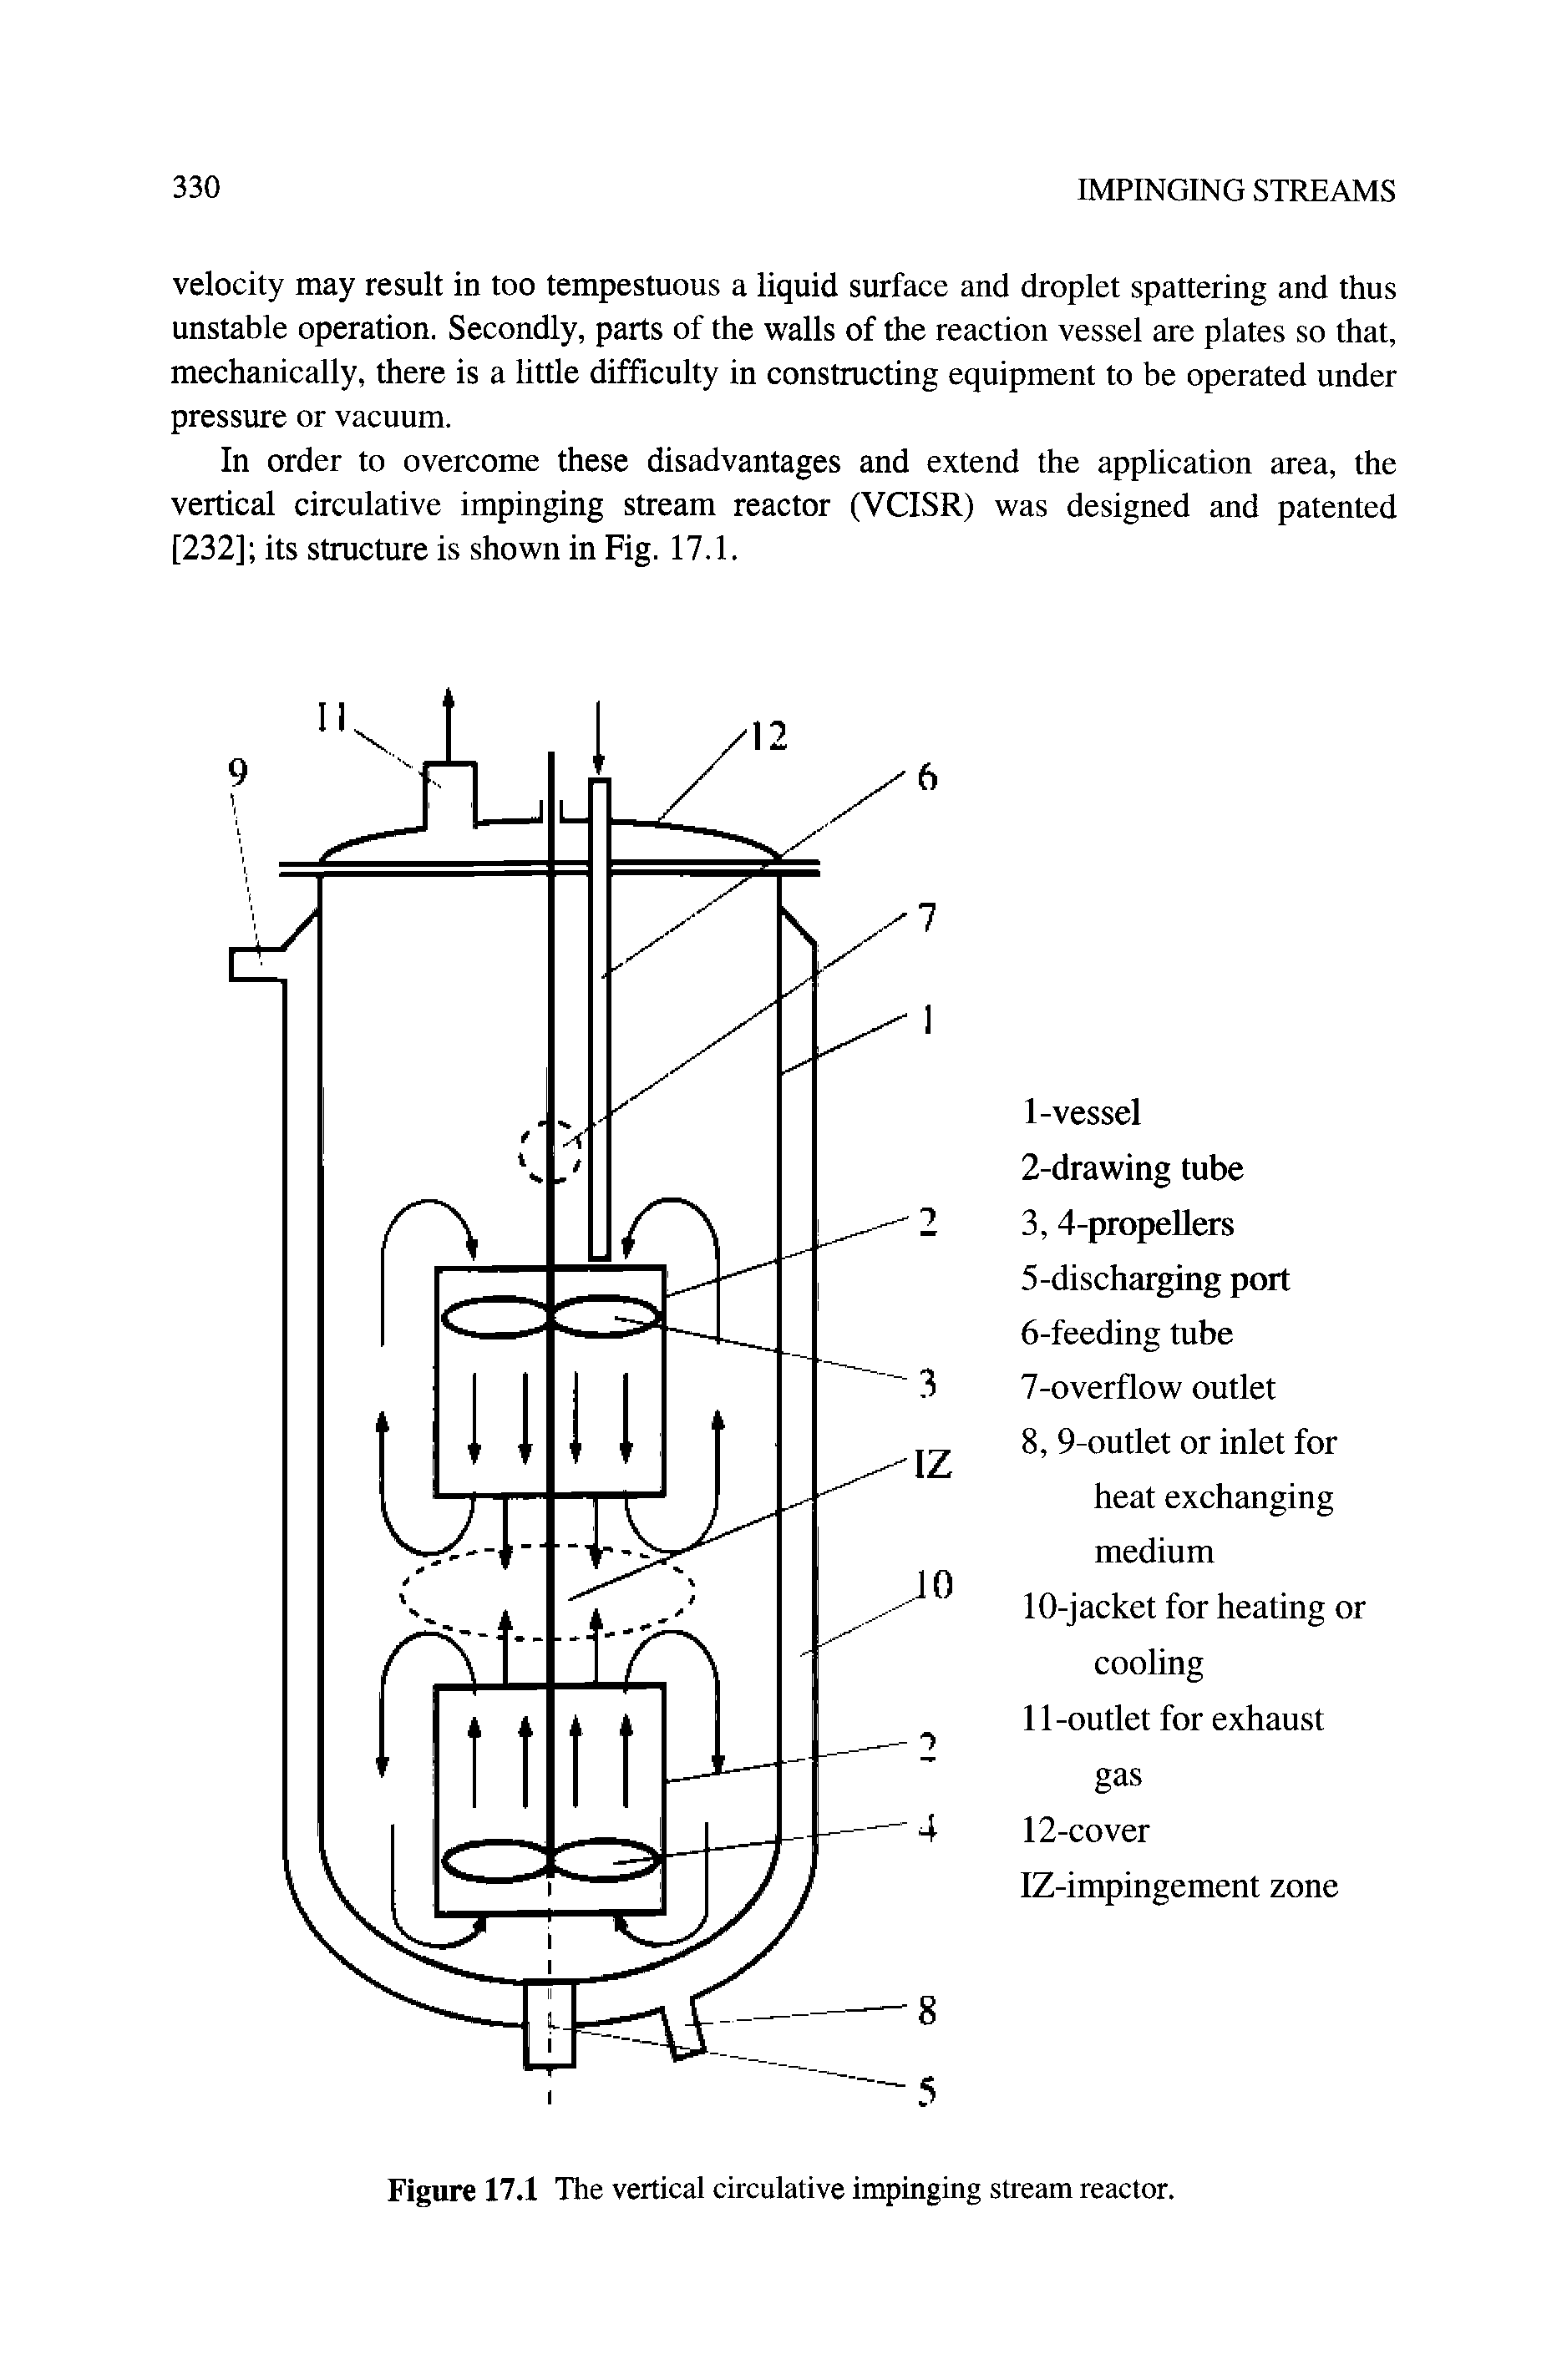 Figure 17.1 The vertical circulative impinging stream reactor.